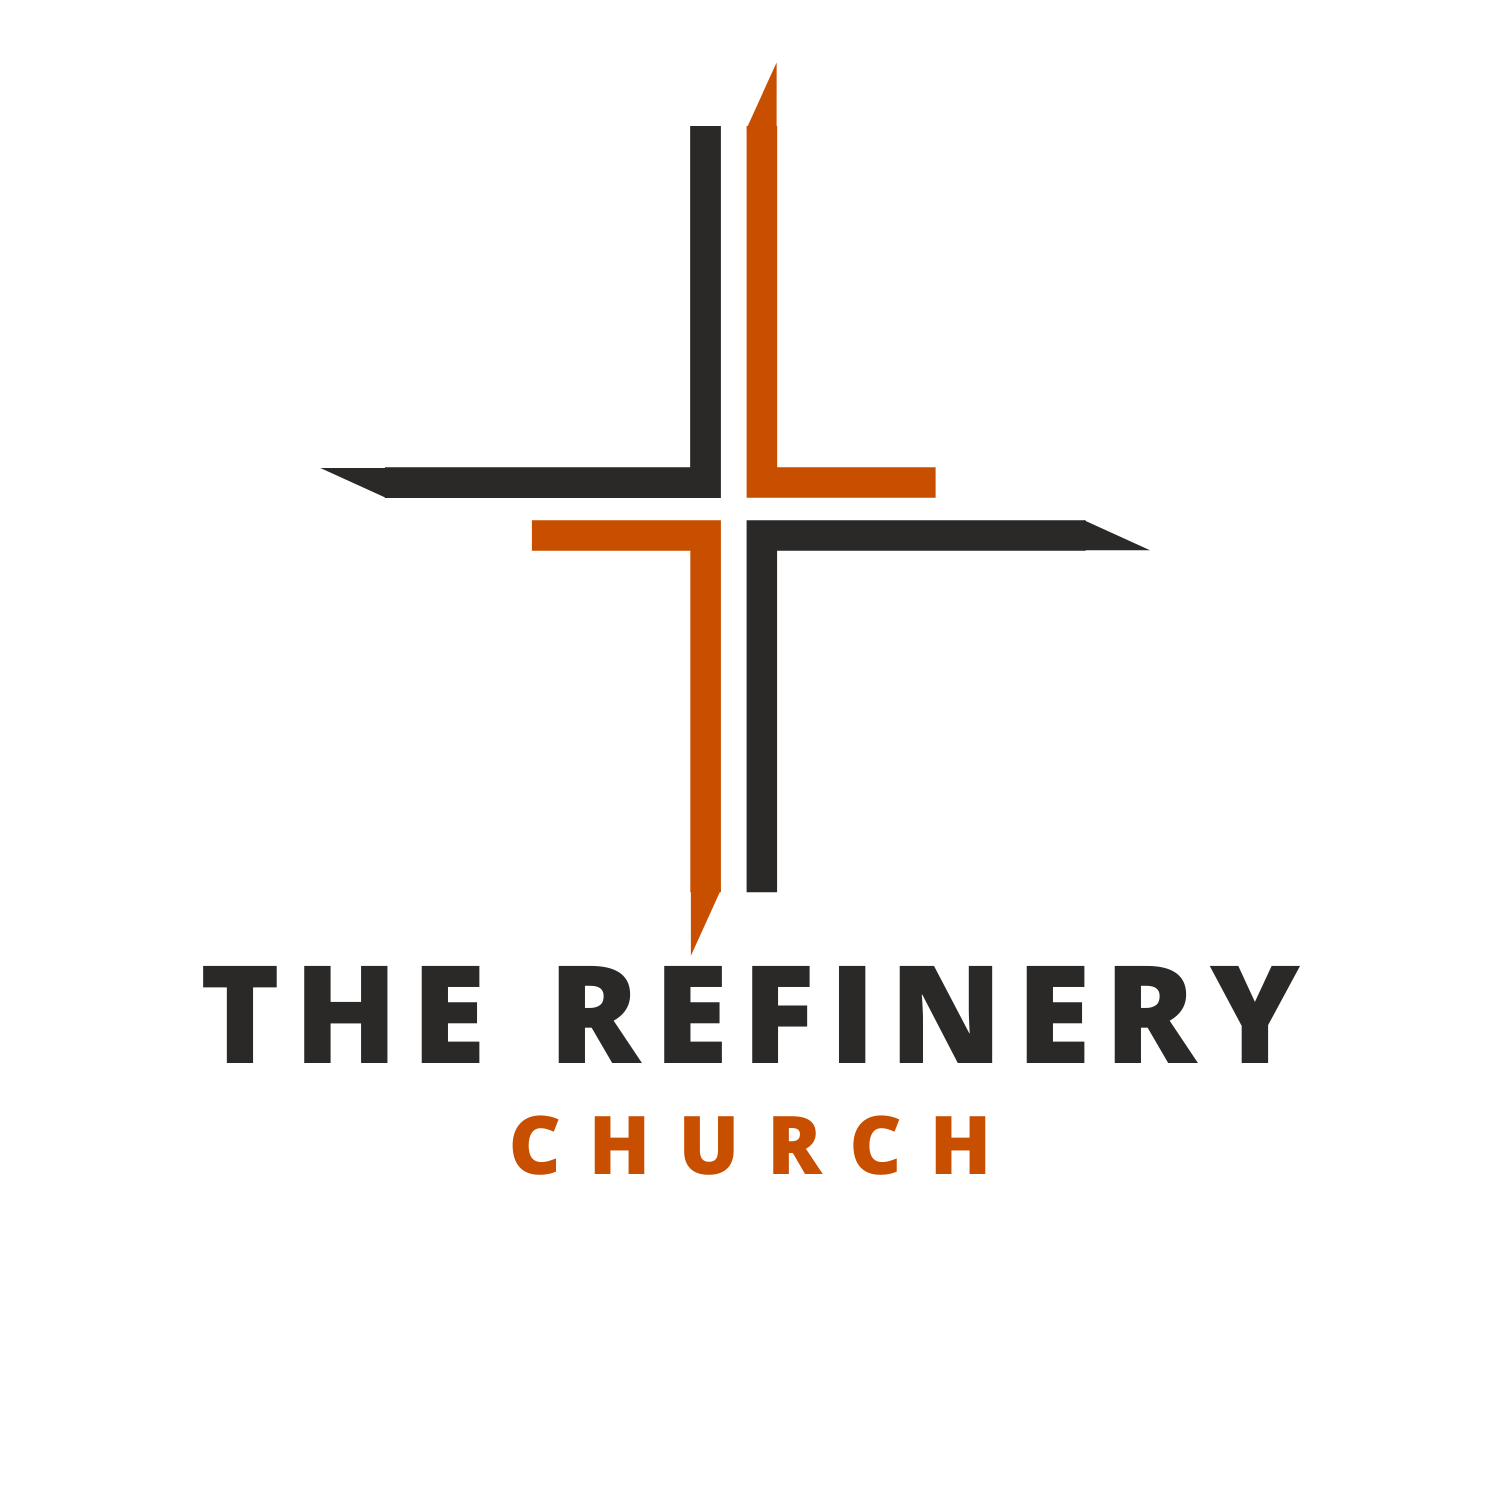 THE REFINERY CHURCH